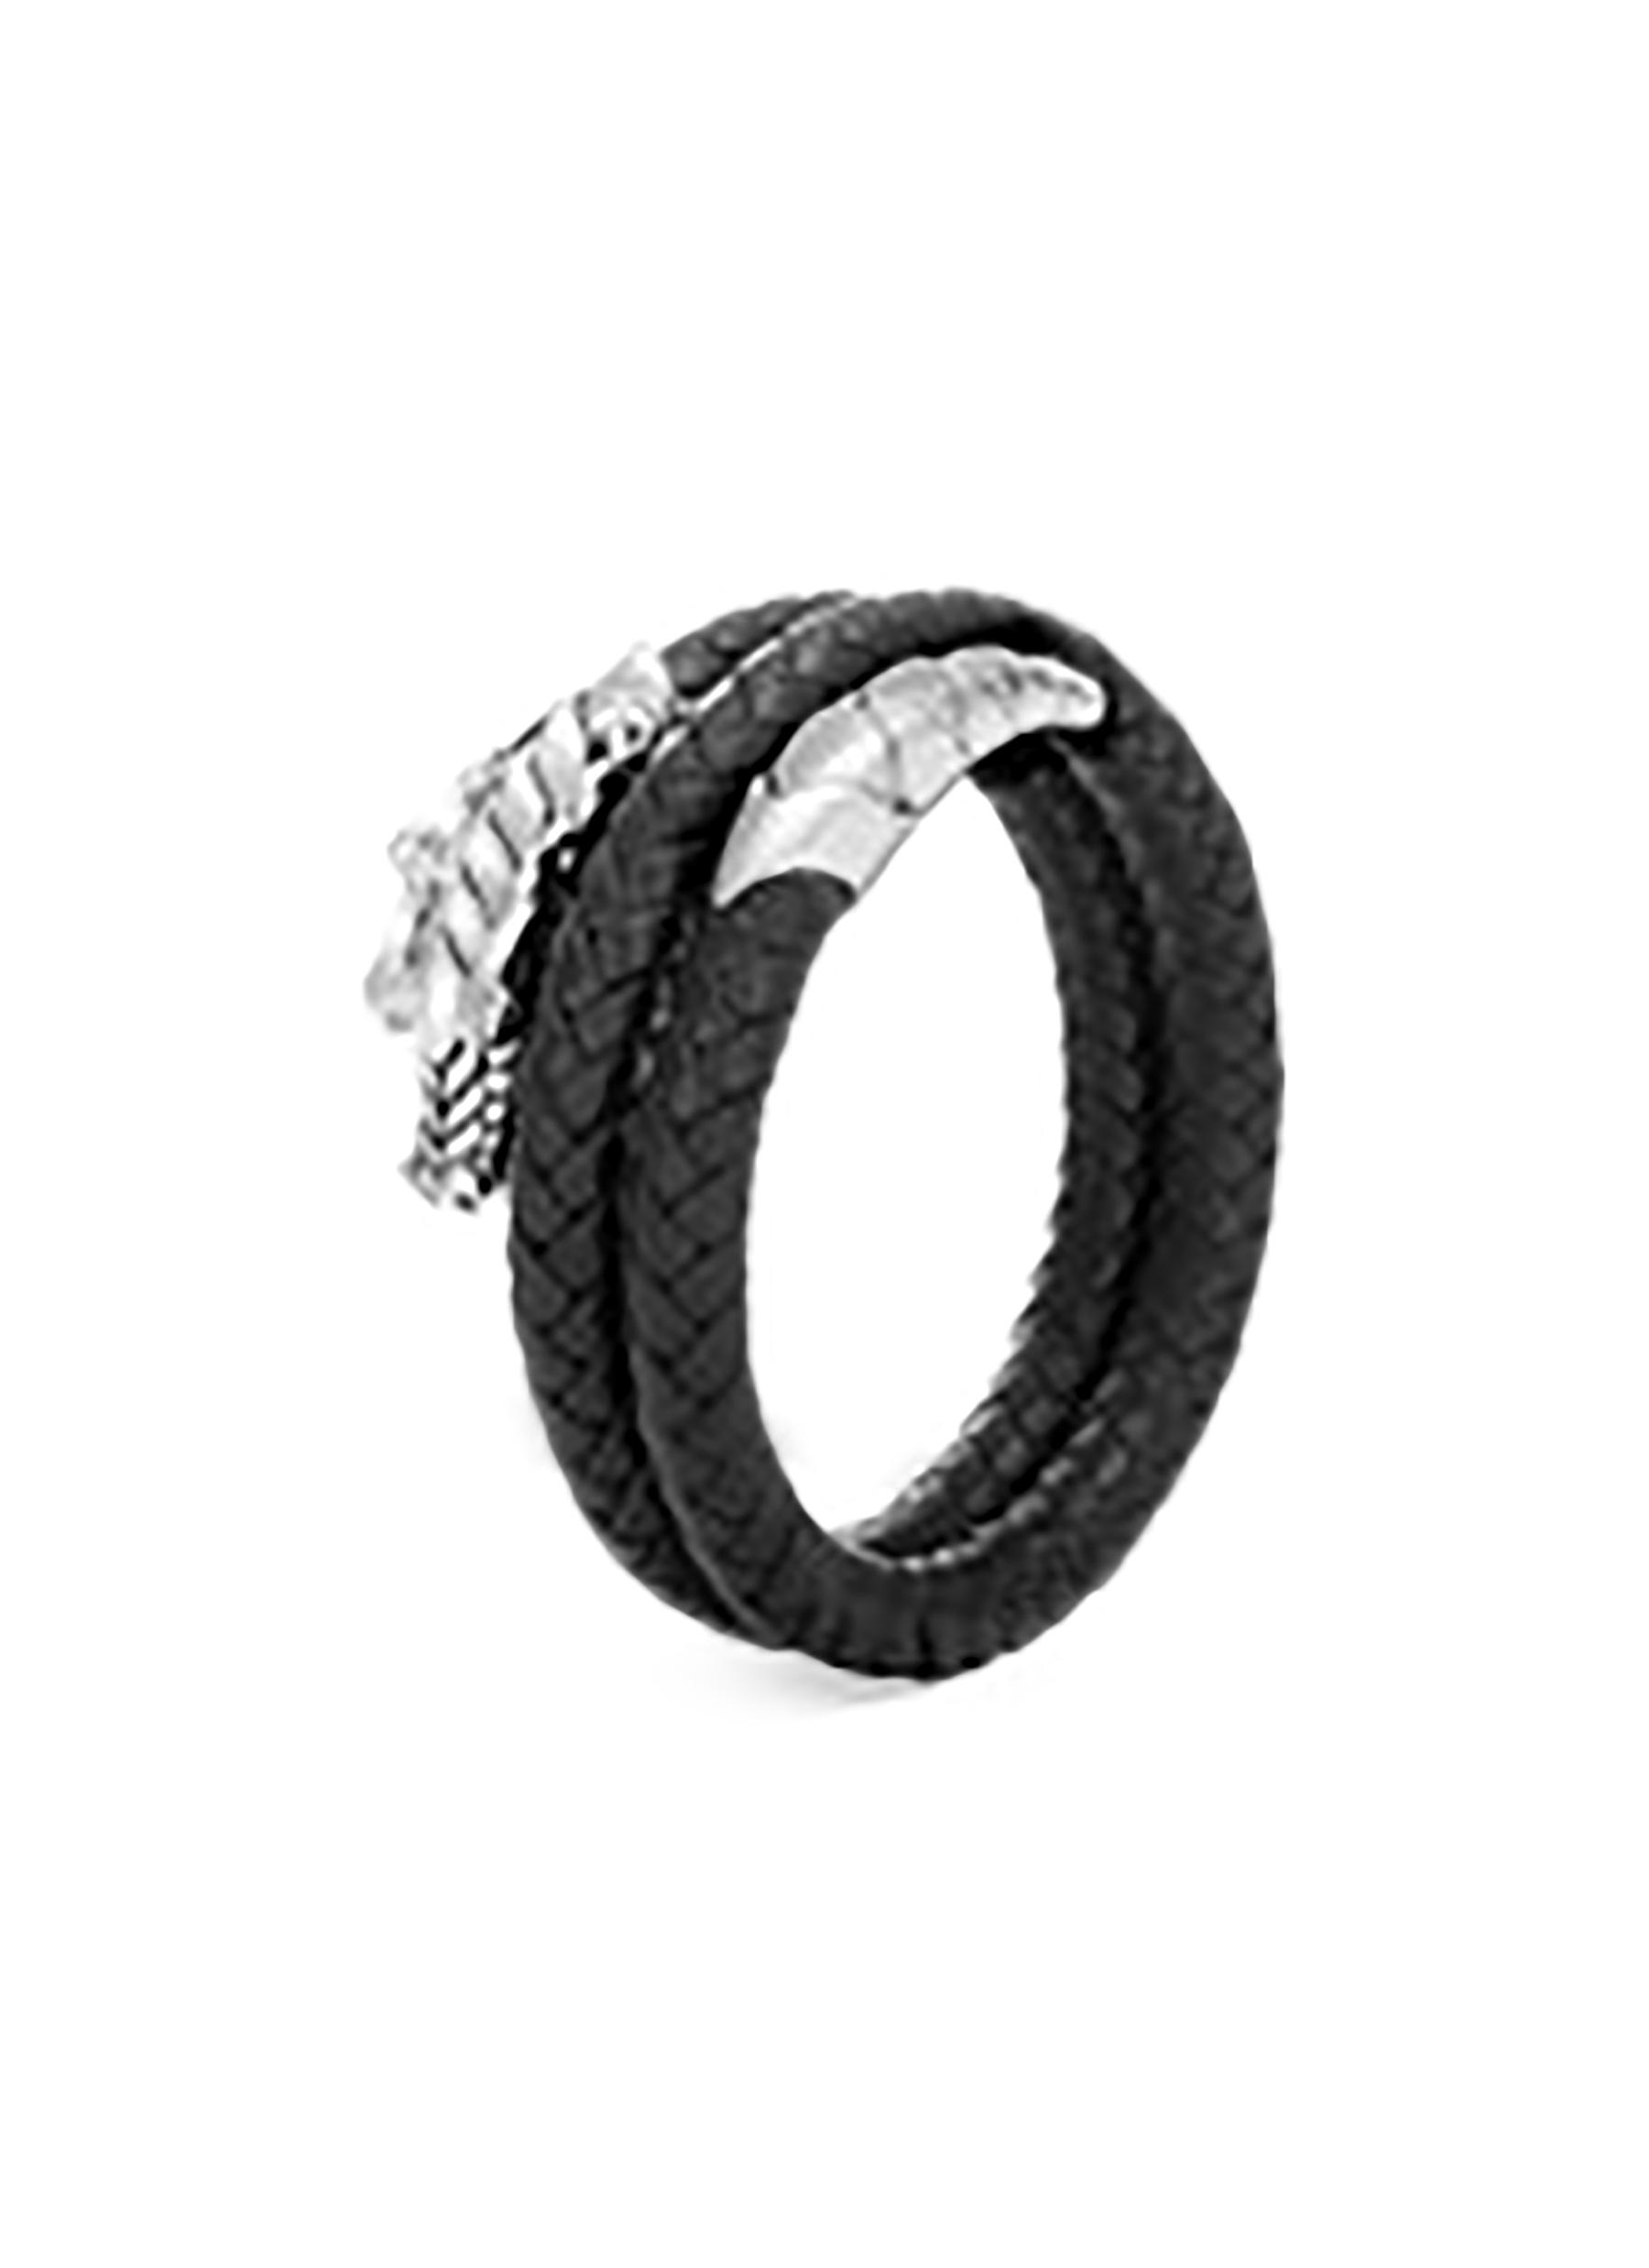 JOHN HARDY | ‘Legends Naga’ Woven Leather Silver Sapphire Double Coil  Bracelet — Size M-L | Women | Lane Crawford - Shop Designer Brands Online